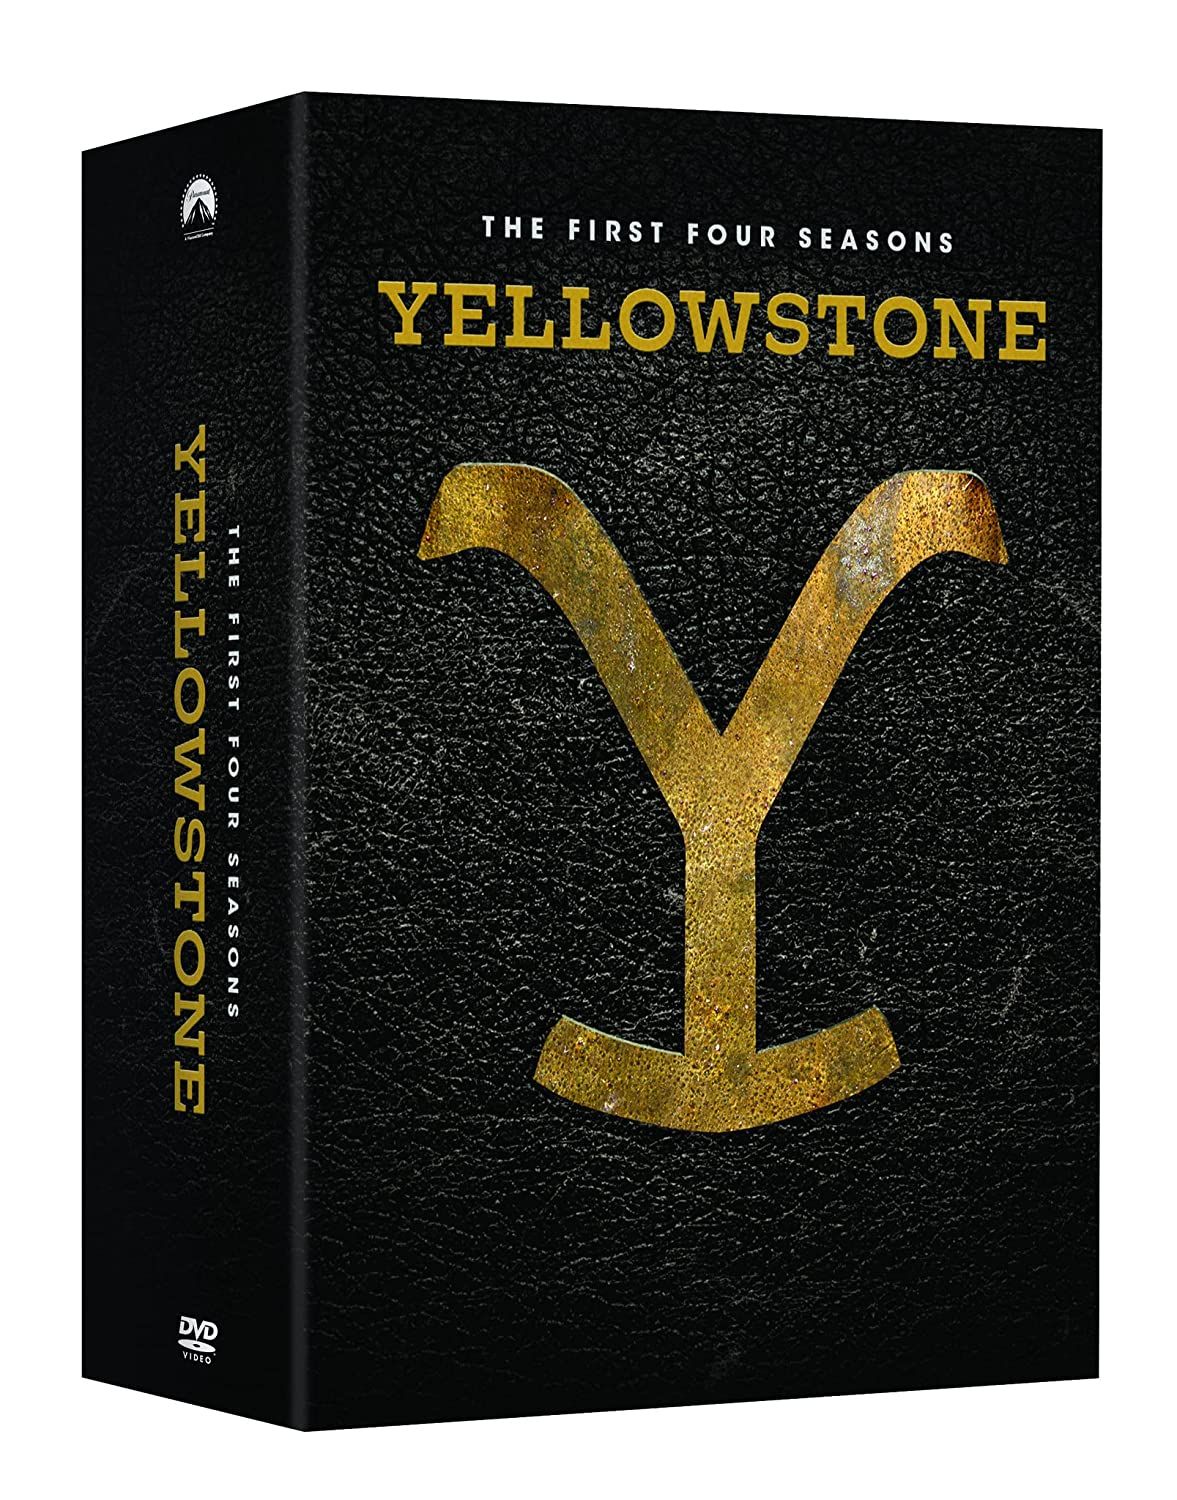 Yellowstone first 4 seasons best DVD sets